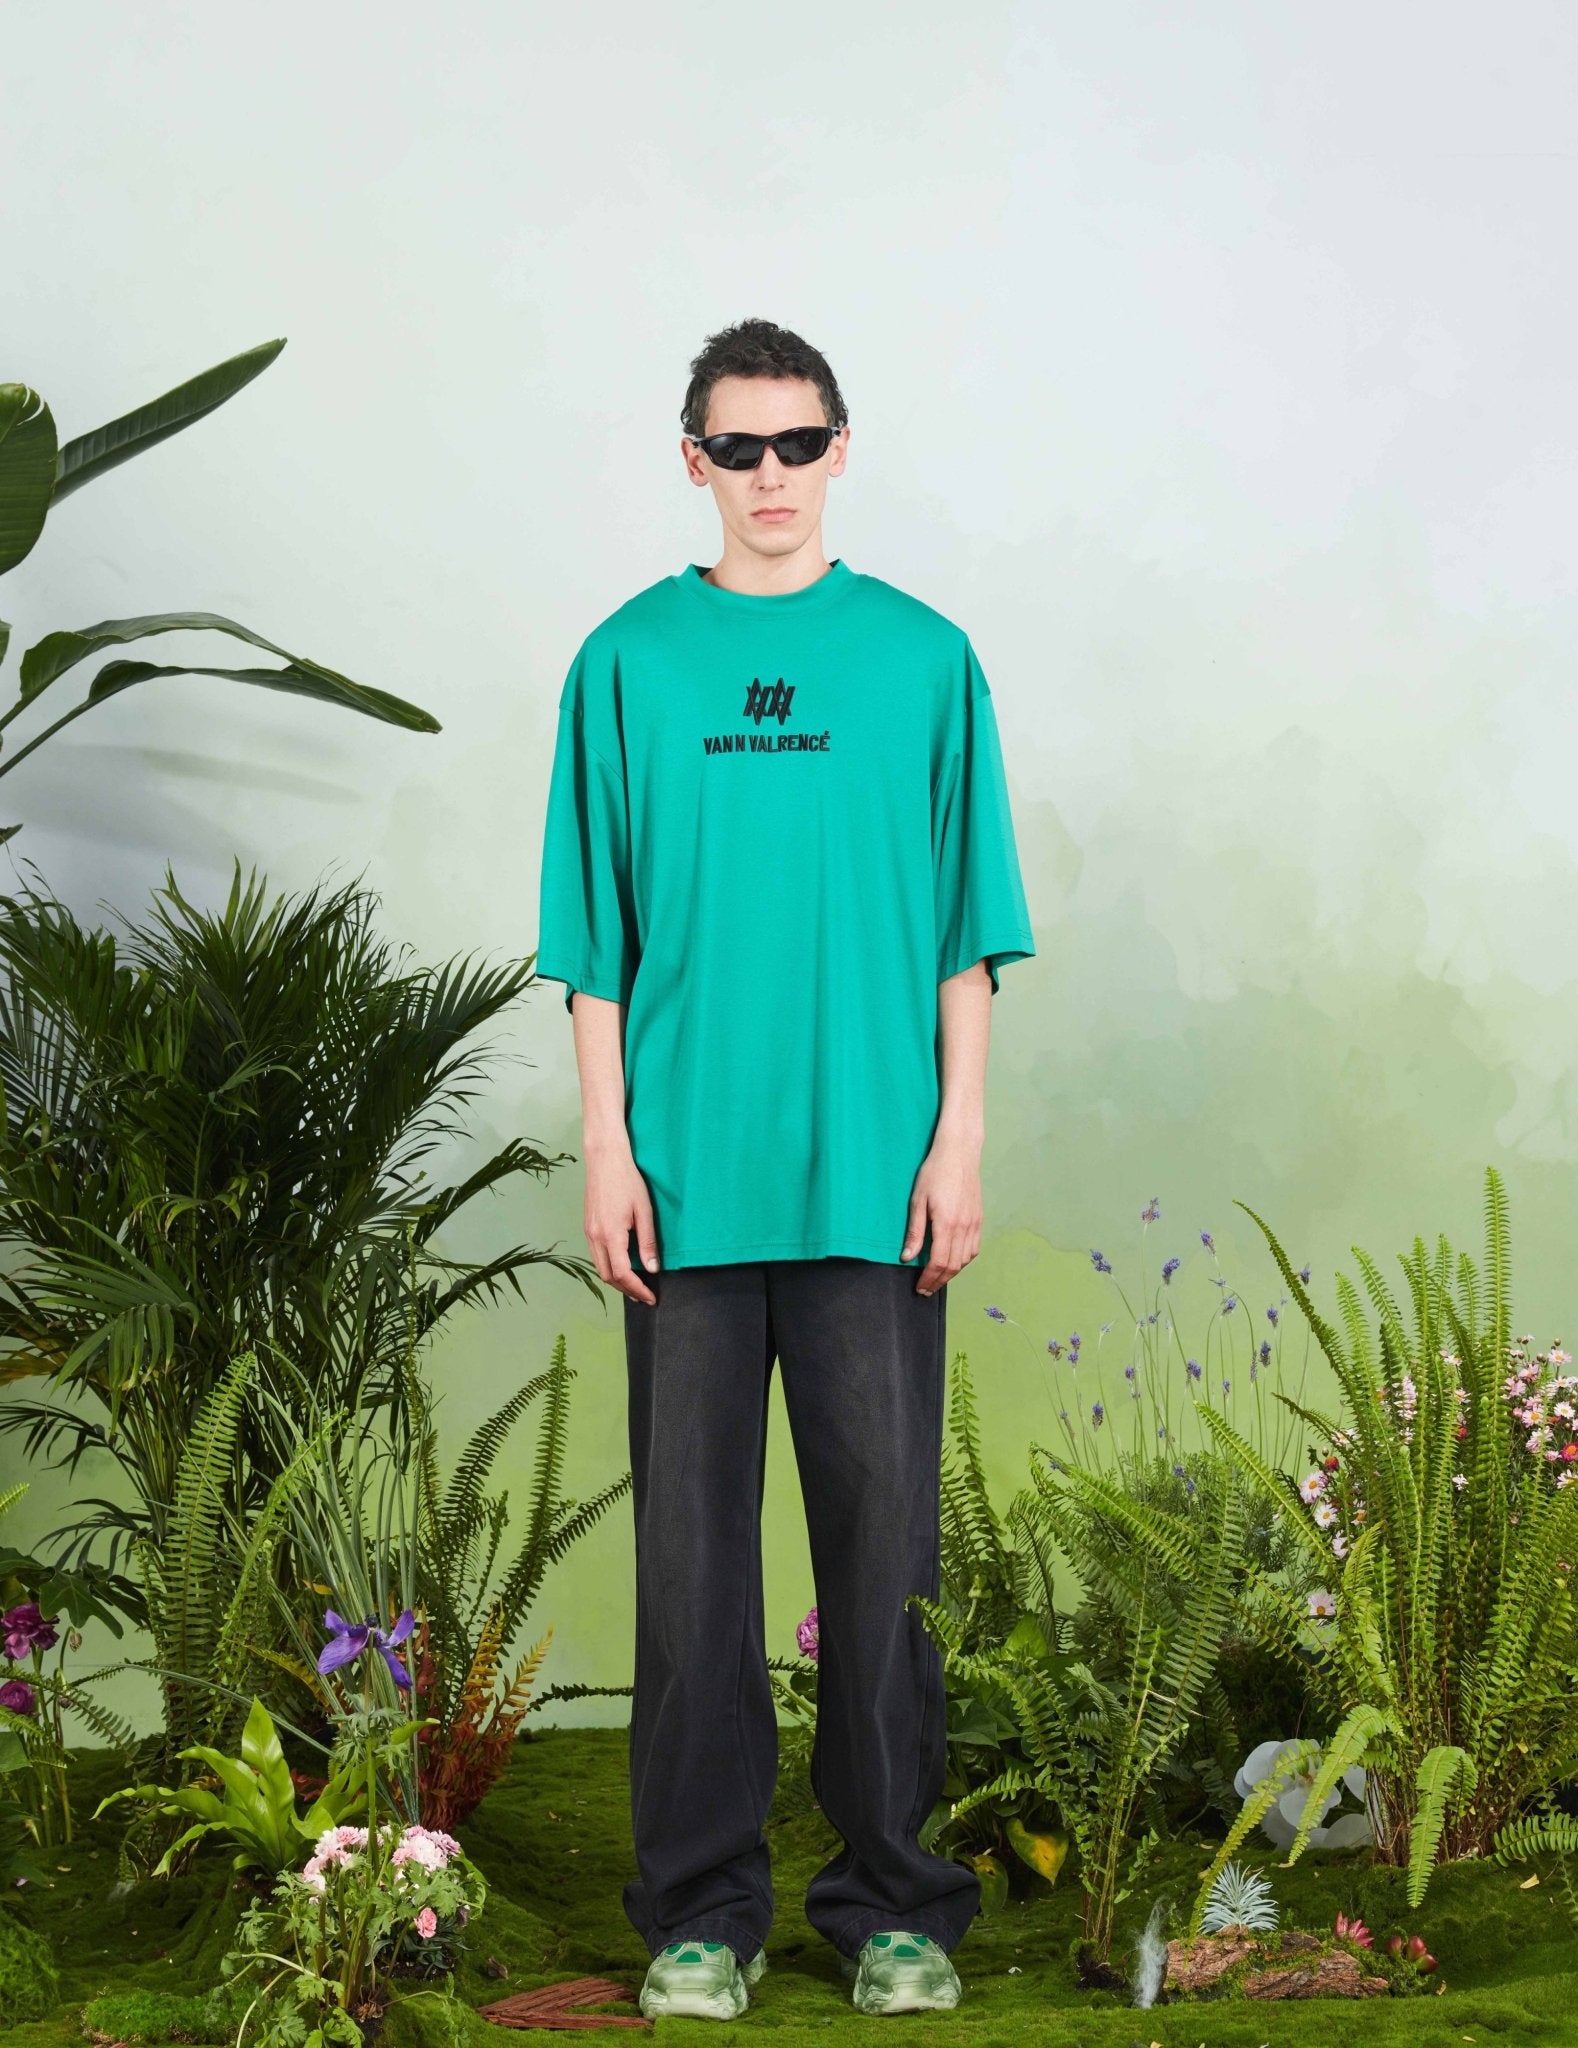 VANN VALRENCÉ Green Basic T-shirt | MADA IN CHINA